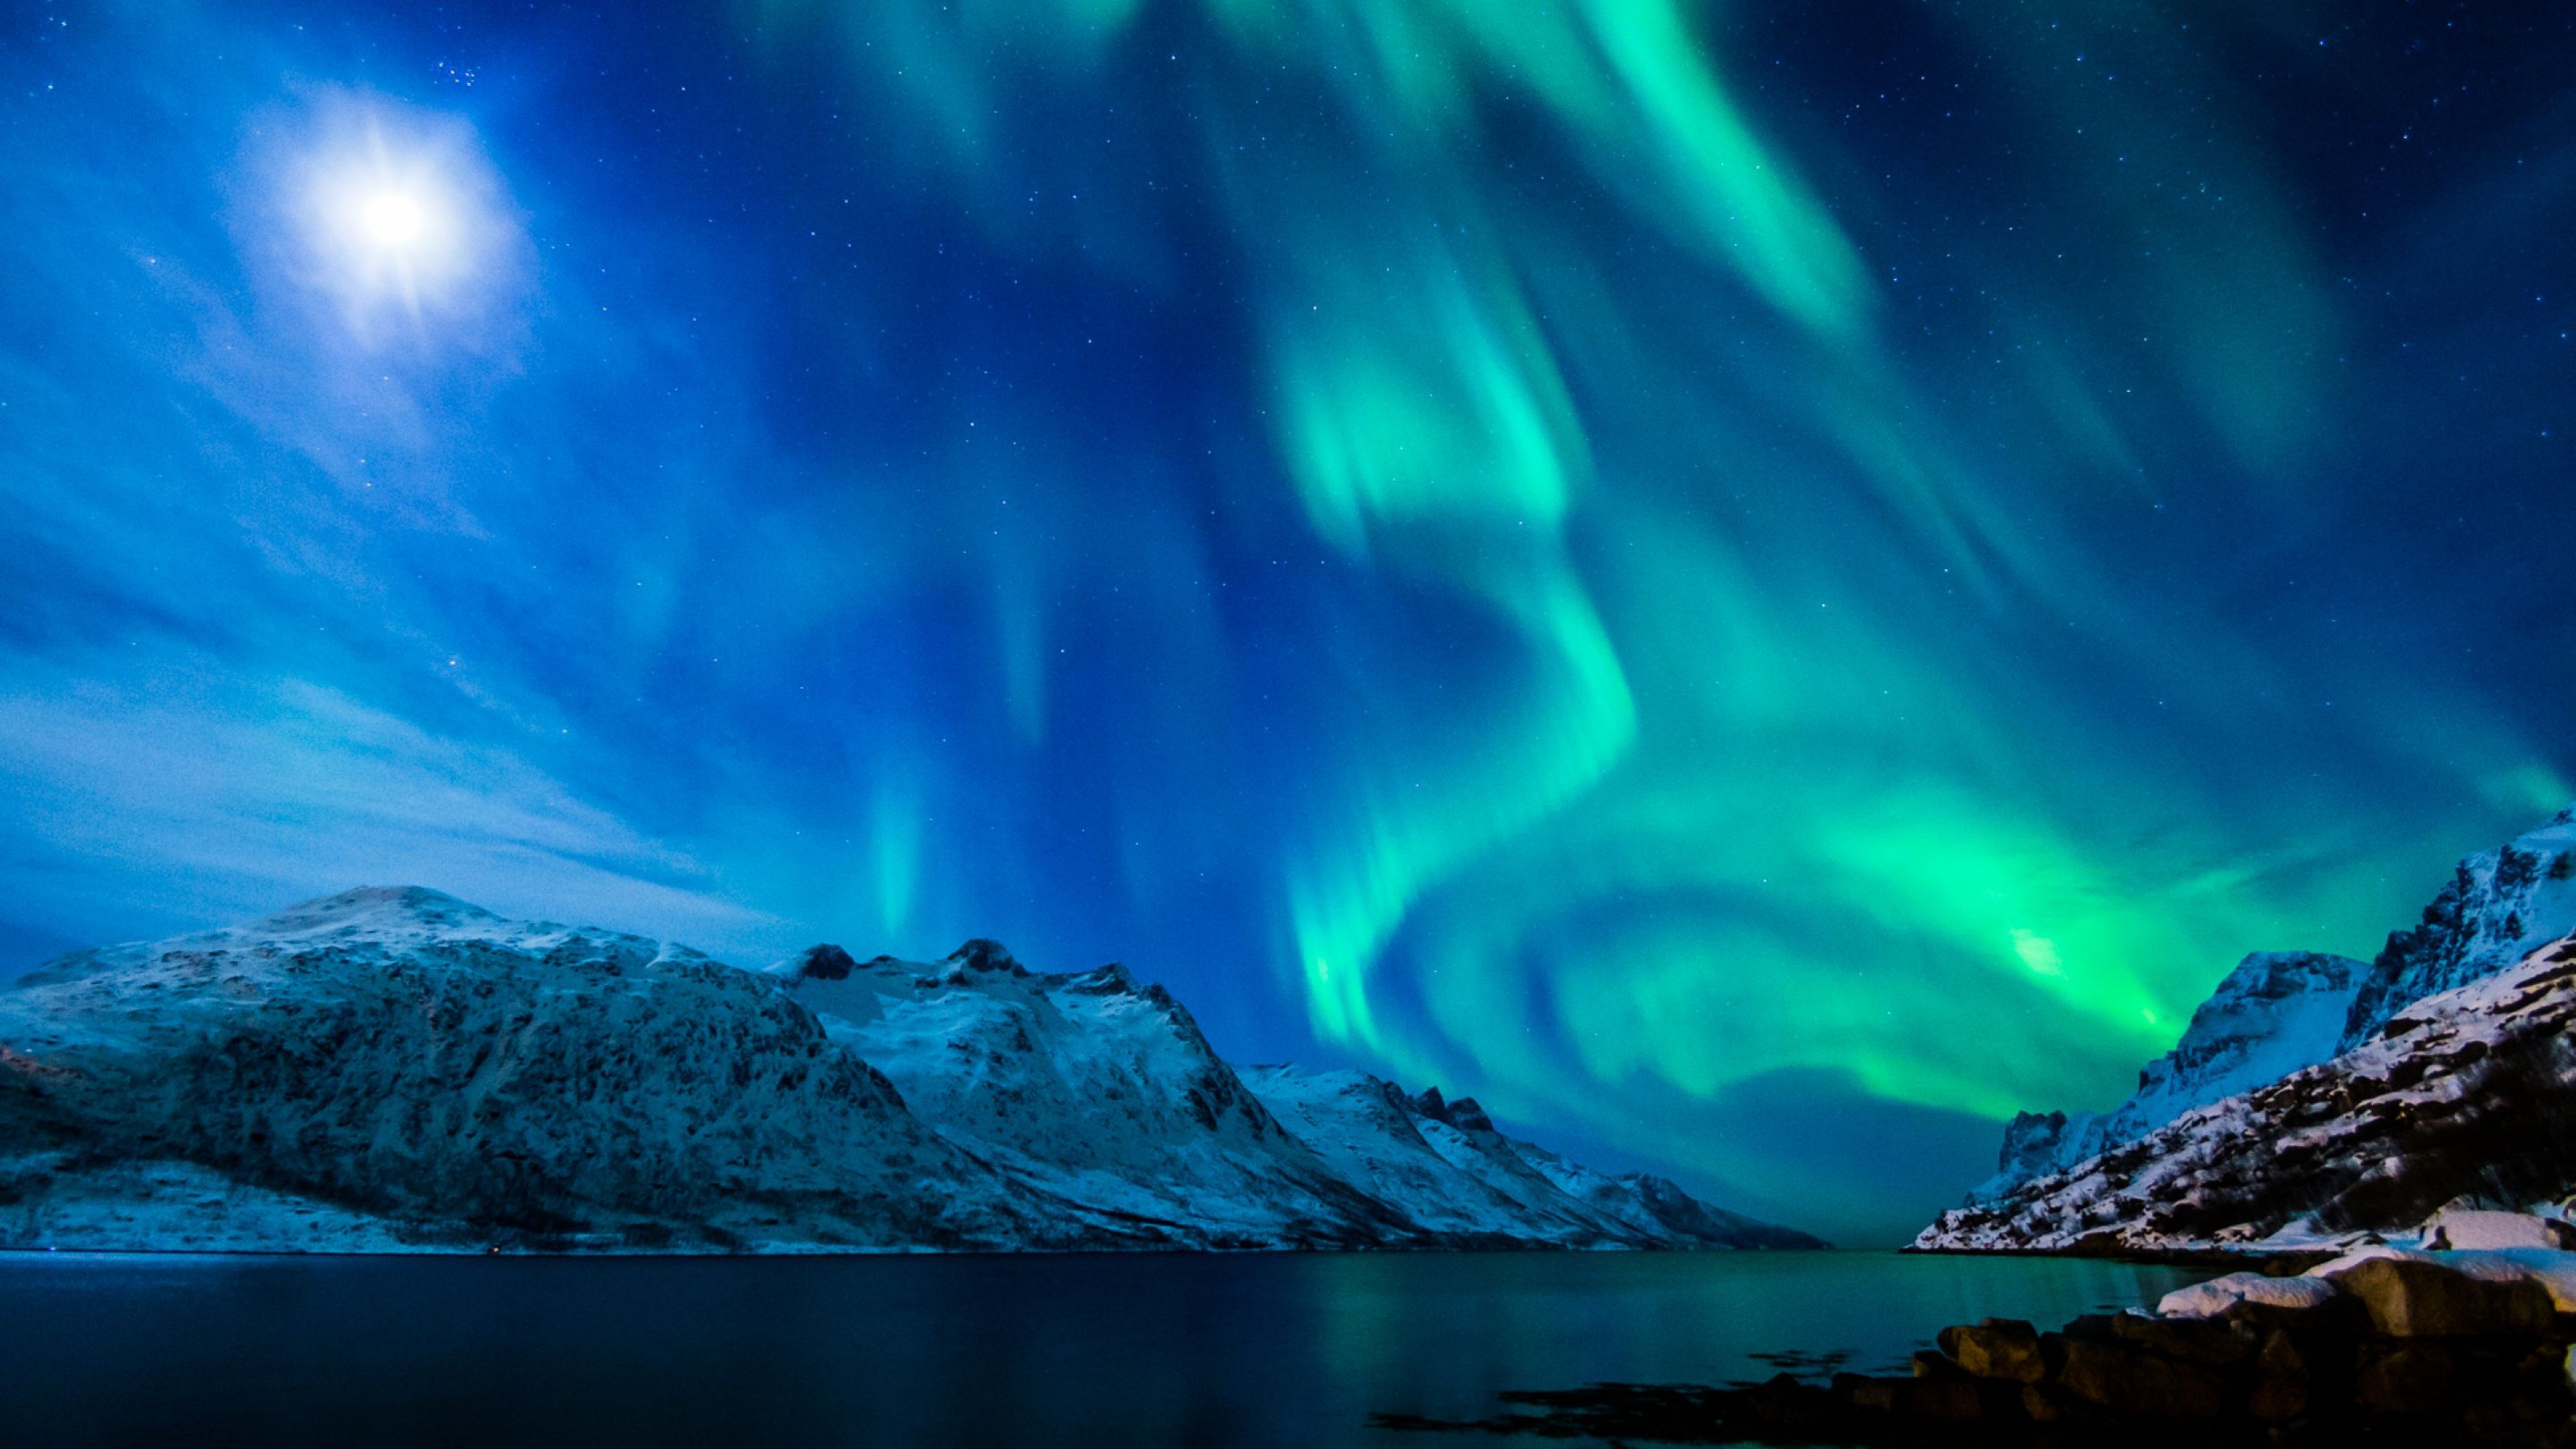 Aurora Borealis, The Wonderful Light in The North Pole's Sky